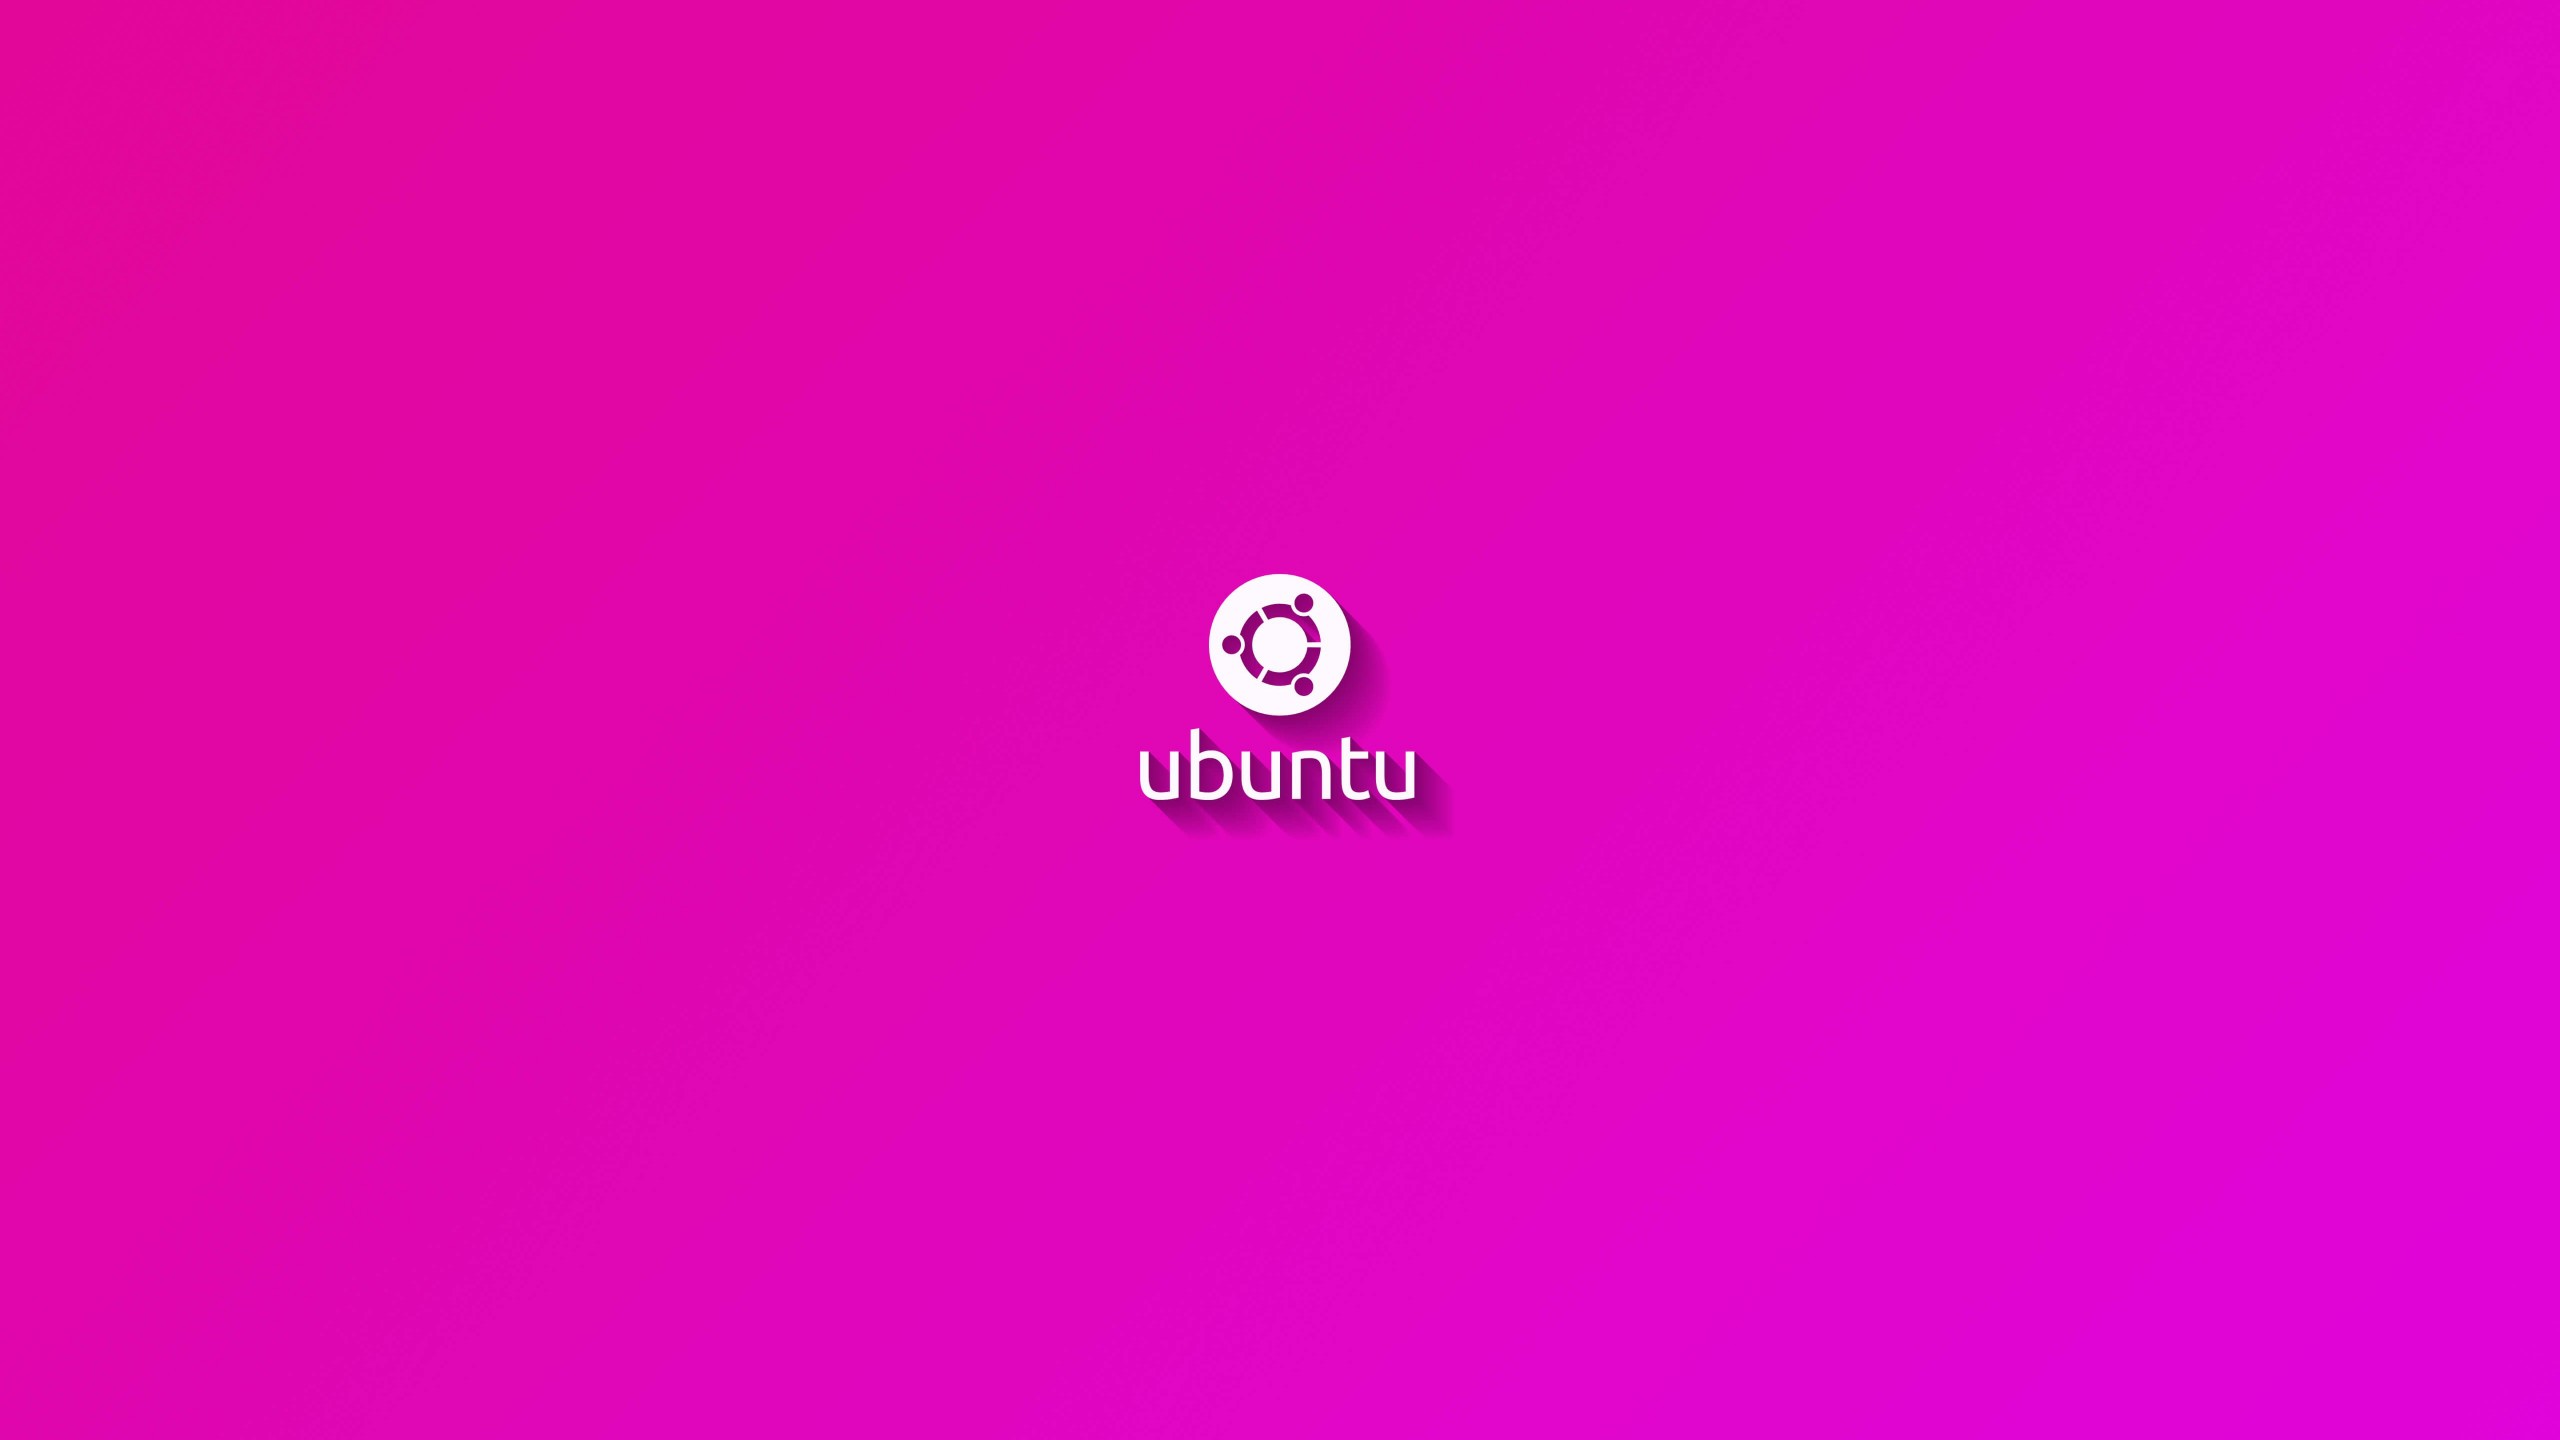 Ubuntu Flat Shadow Pink Wallpaper for Social Media YouTube Channel Art